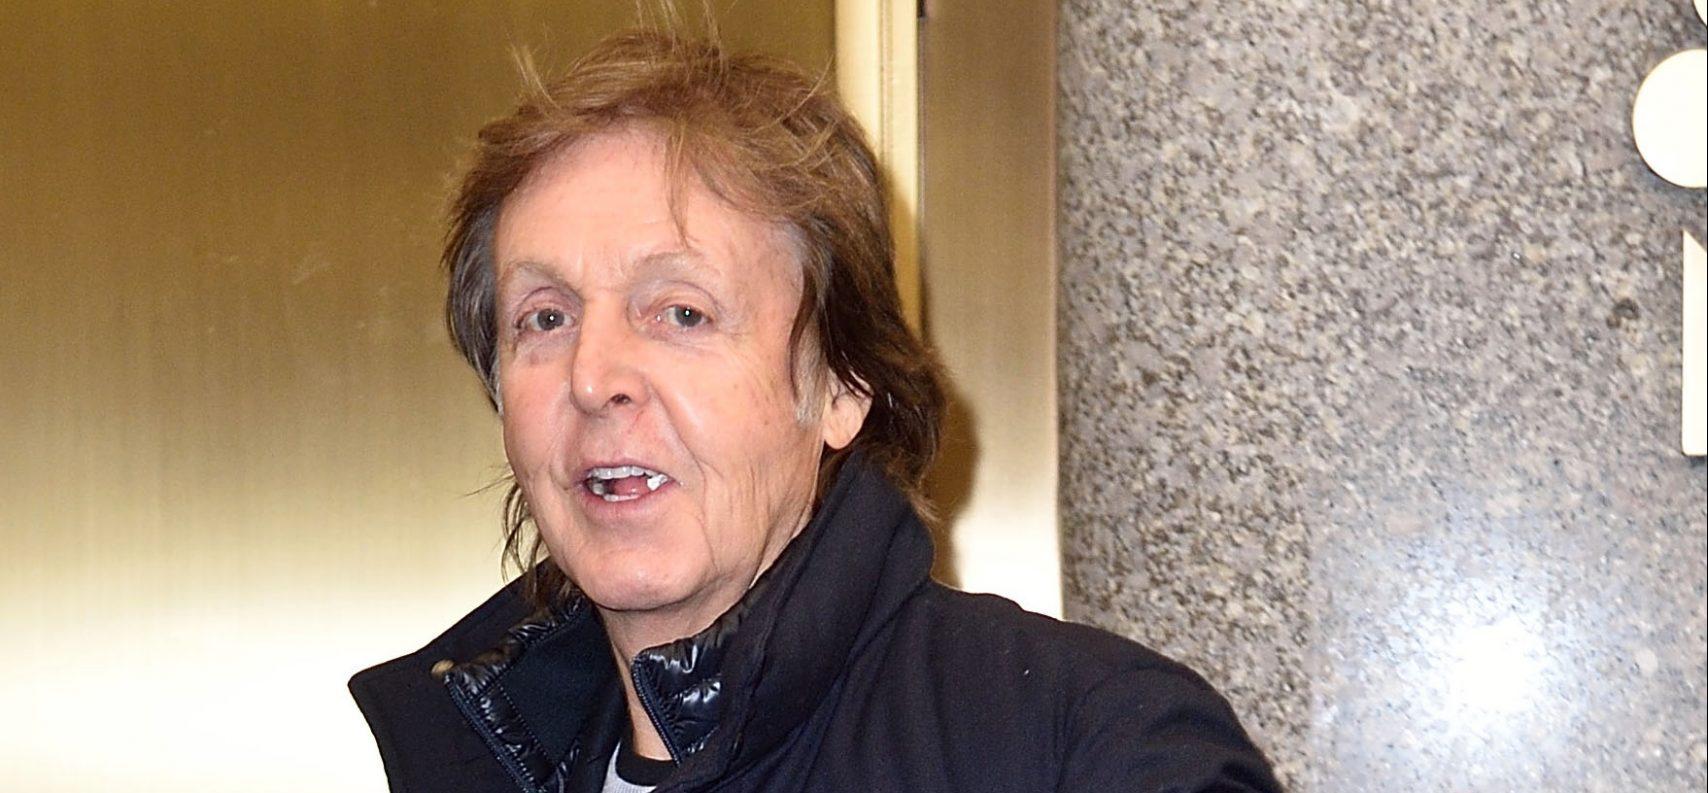 Sir Paul McCartney is oldest headliner at Glastonbury 2022